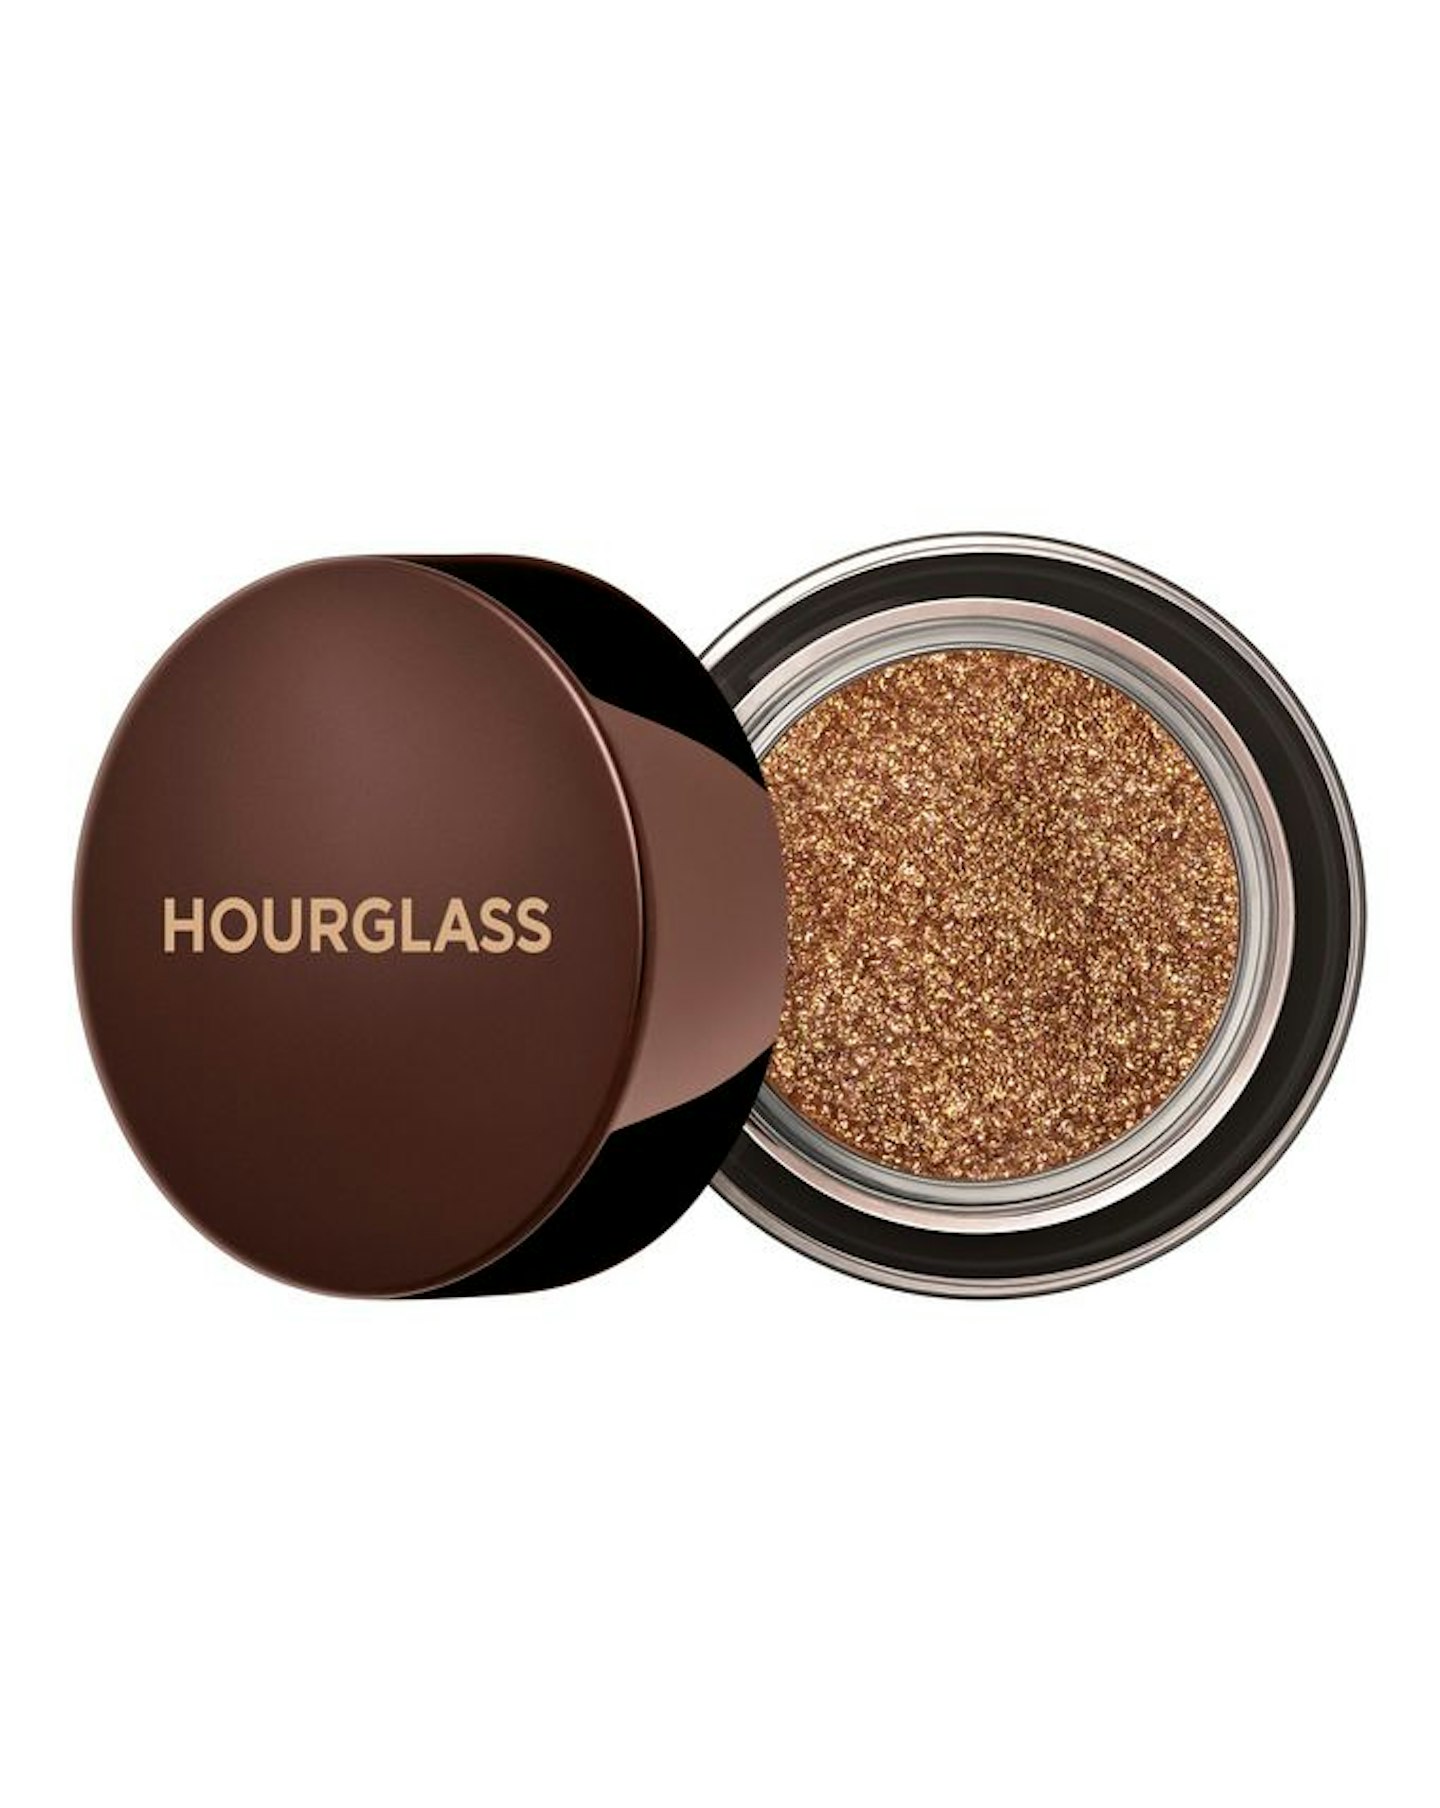 Hourglass Scattered Light Glitter Eyeshadow in Burnish, £26